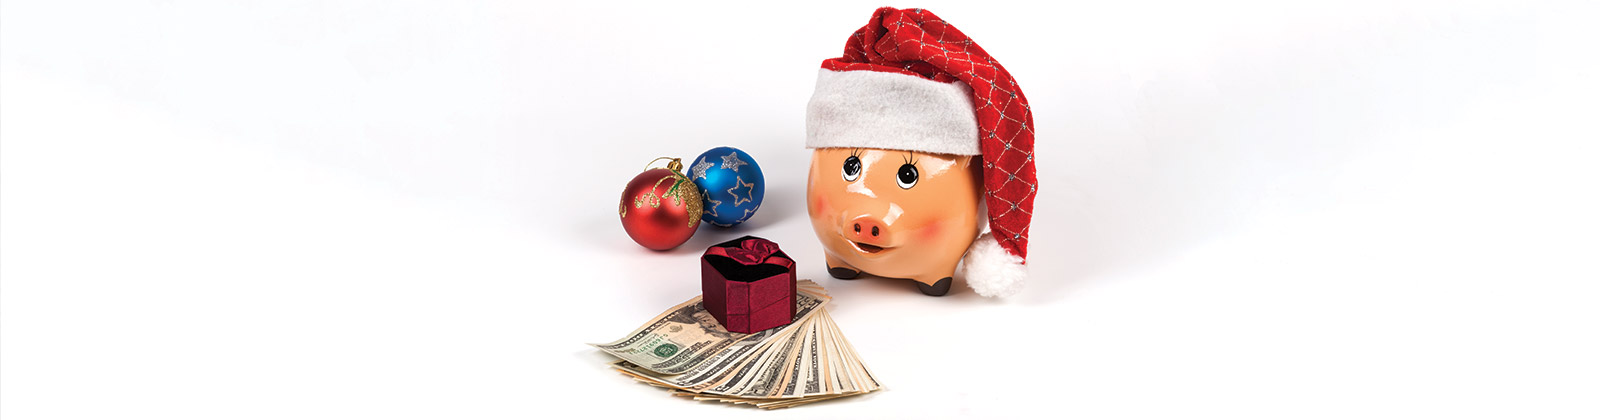 Piggy bank with Santa hat